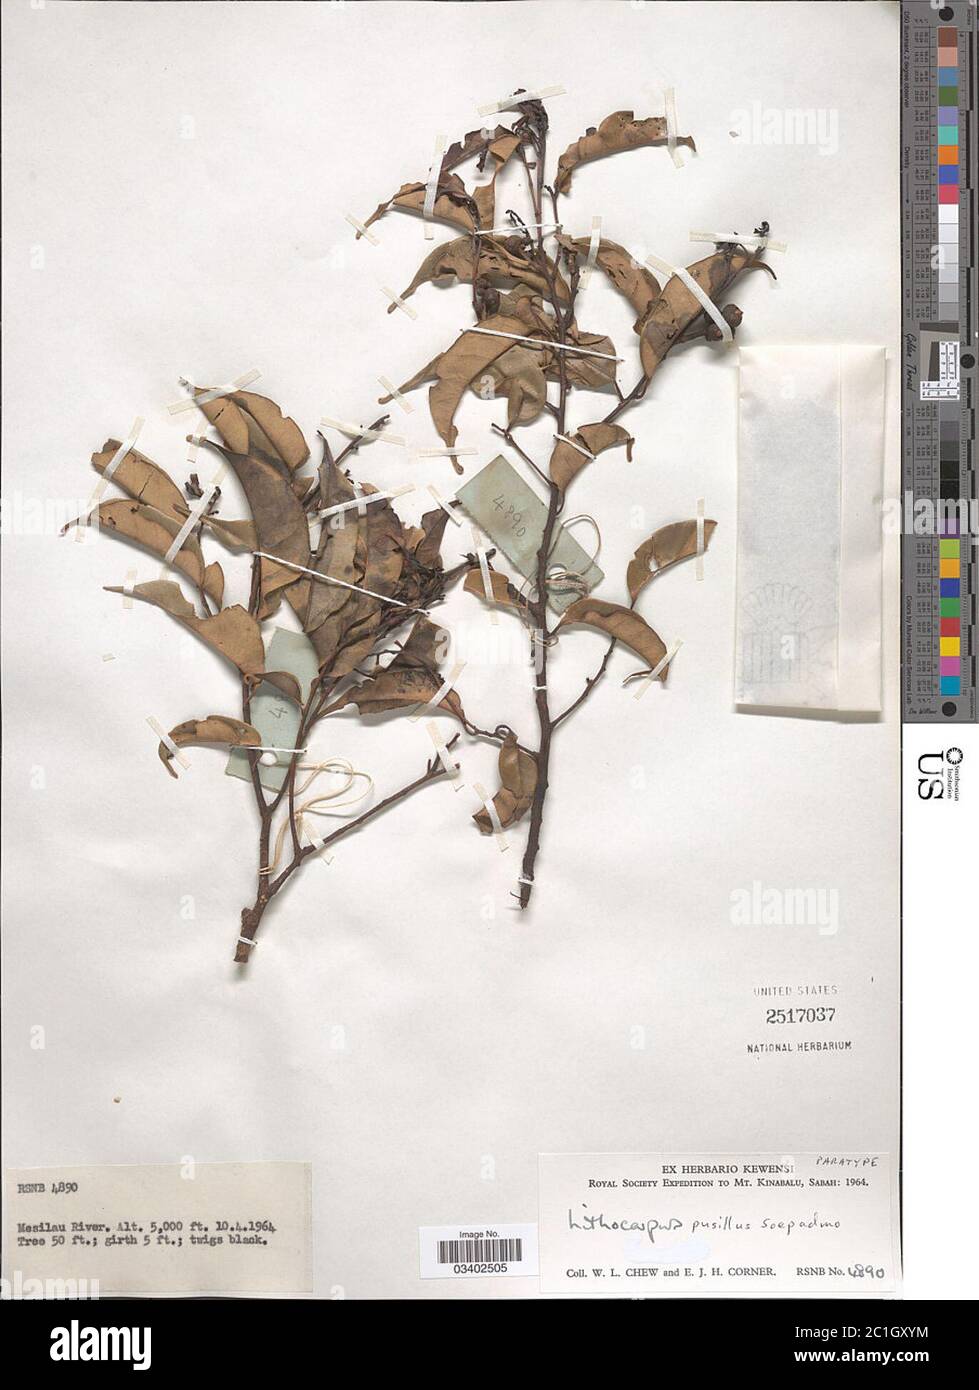 Lithocarpus pusillus Soepadmo Lithocarpus pusillus Soepadmo. Stock Photo